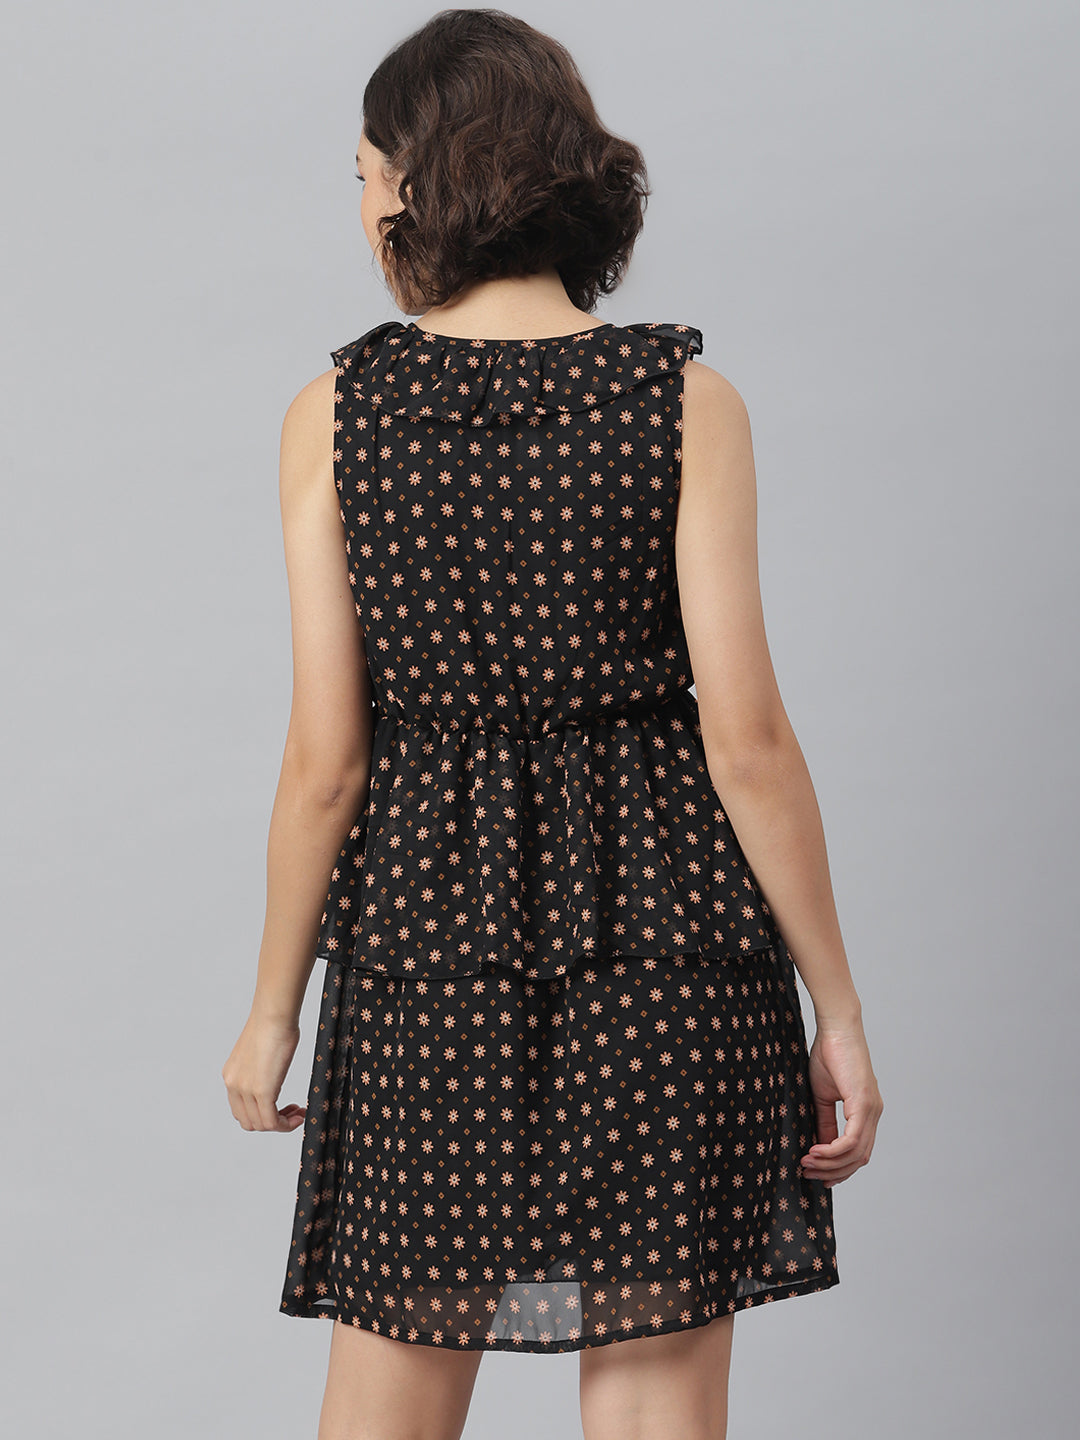 Black-Polyester-Printed-Peplum-Style-Dress